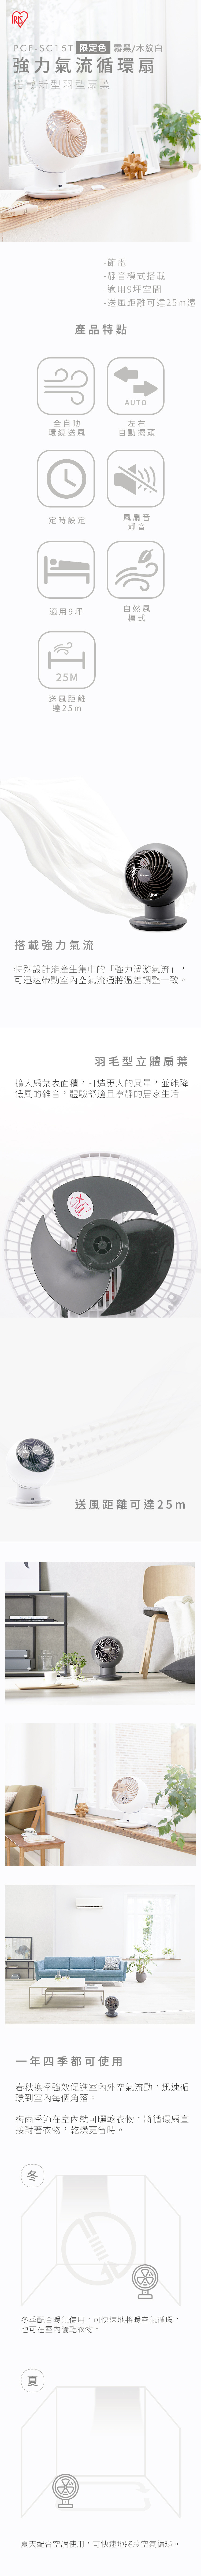 IRIS OHYAMA 靜音渦流3D立體擺頭遙控循環扇 PCF-SC15T 木紋白/霧黑IRIS OHYAMA 靜音渦流3D立體擺頭遙控循環扇PCF-SC15T，節能省電且適用於9坪空間。新型羽毛扇葉設計，全方位送風，超靜音運轉，安全設計適合家庭使用。適合全年使用，附遙控器與多段風力調整。立即購買，提升您的家居舒適度！